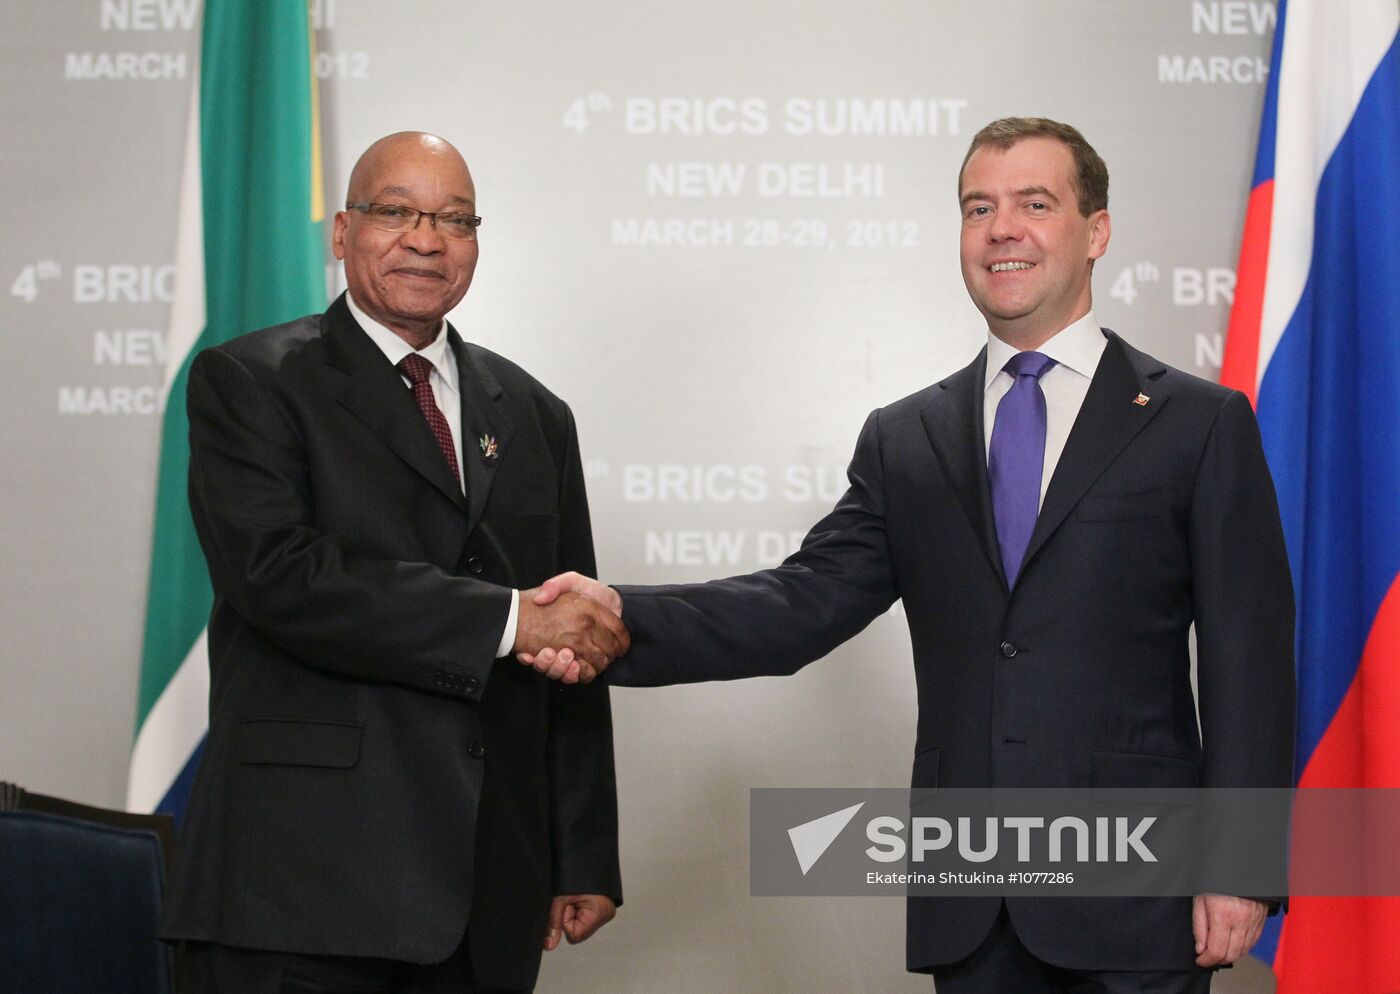 Dmitry Medvedev meets with Jacob Zuma in New Delhi